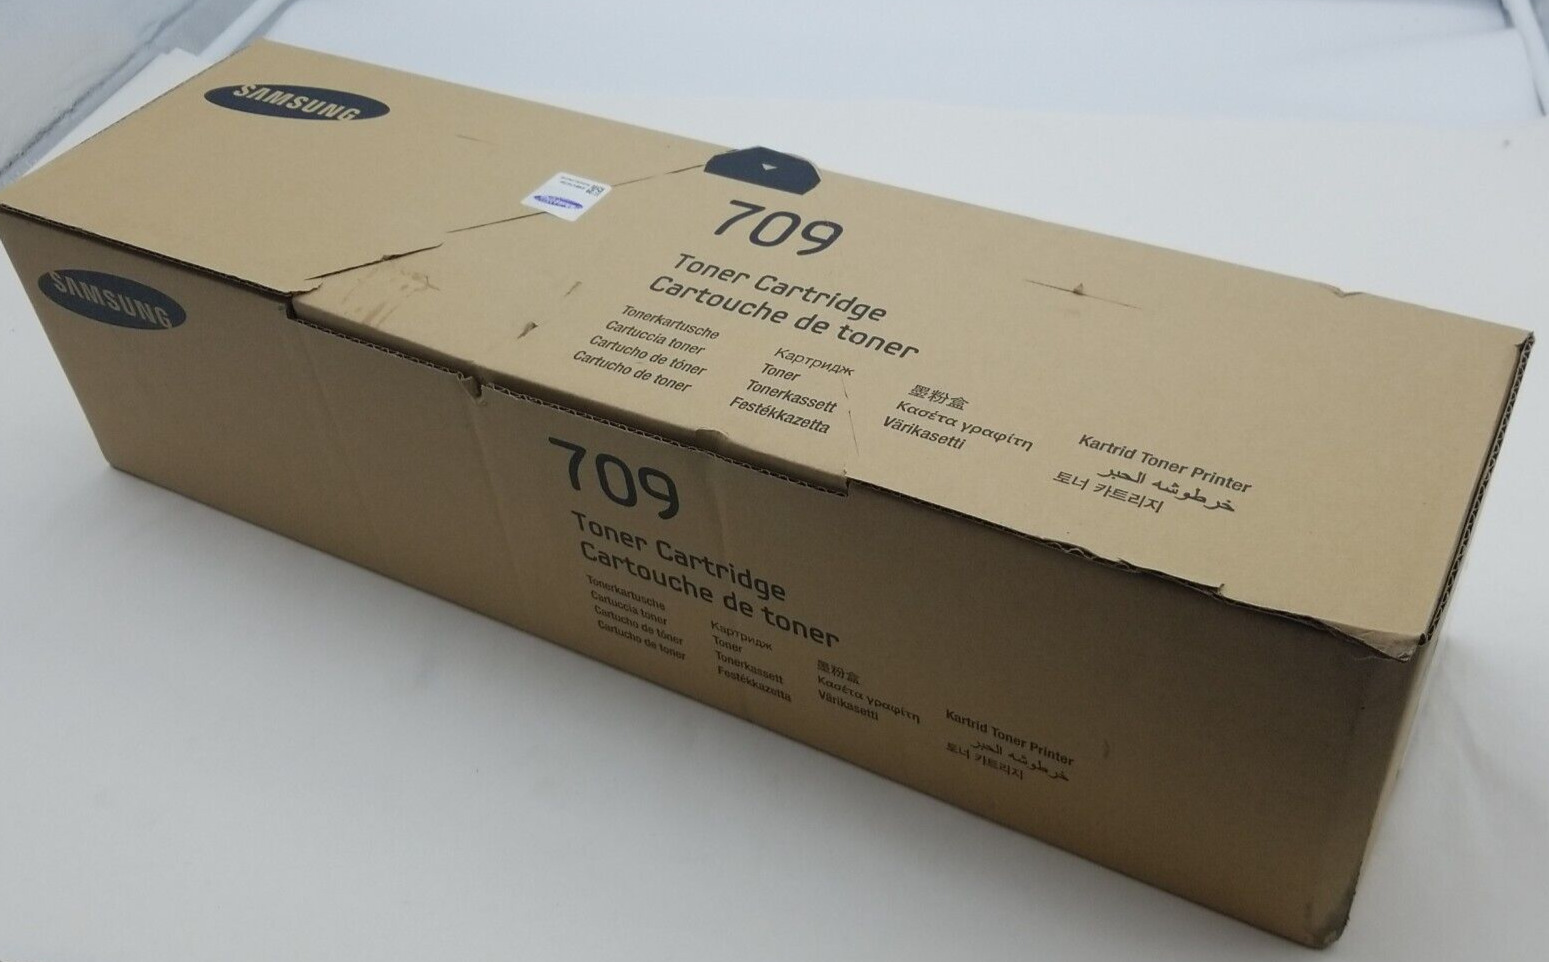 Samsung MLT-D709S Toner Cartridge Black SS799A for the Samsung SCX-8123 NA